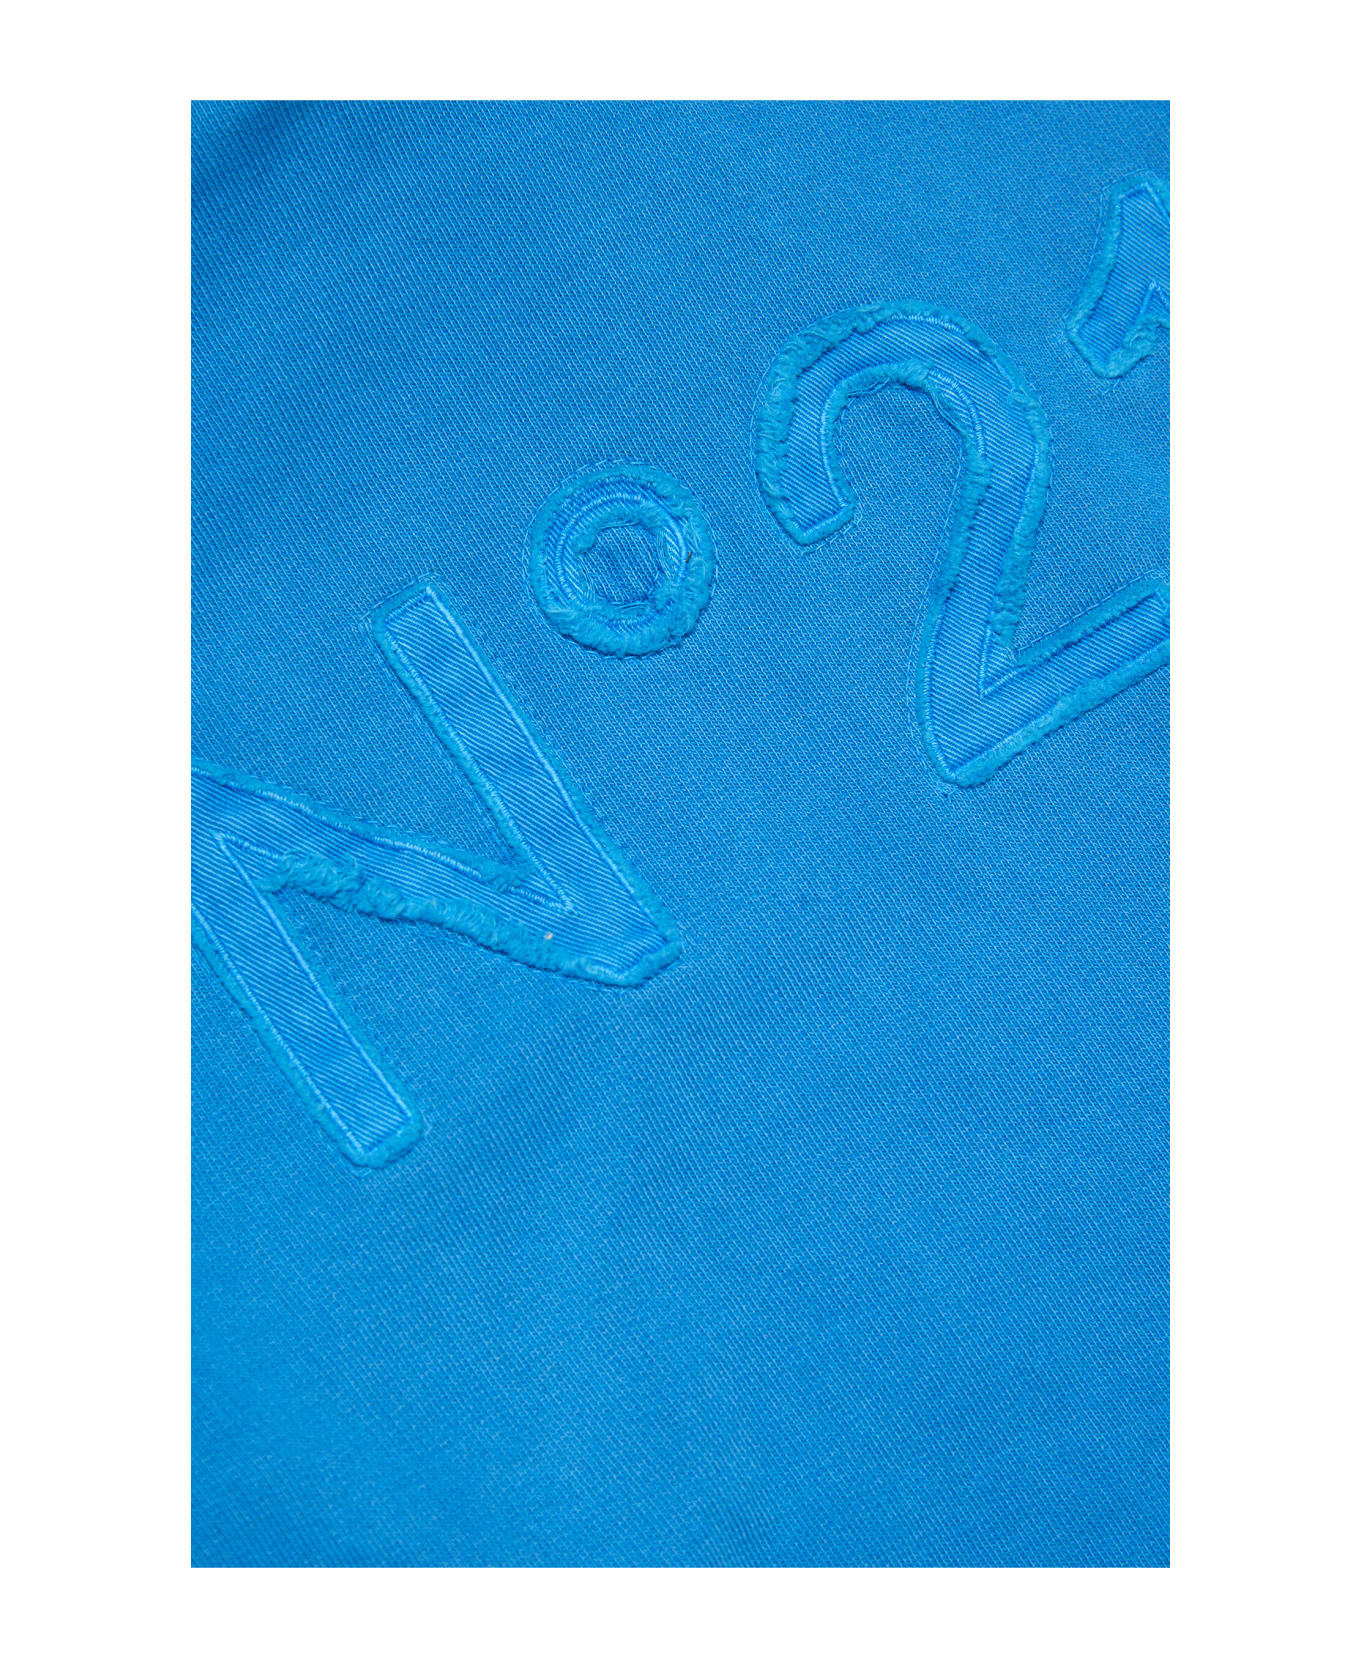 N.21 N21s165u Over Sweat-shirt N°21 Light Blue Vintage-effect Hooded Sweatshirt With Textured Logo - New light blue